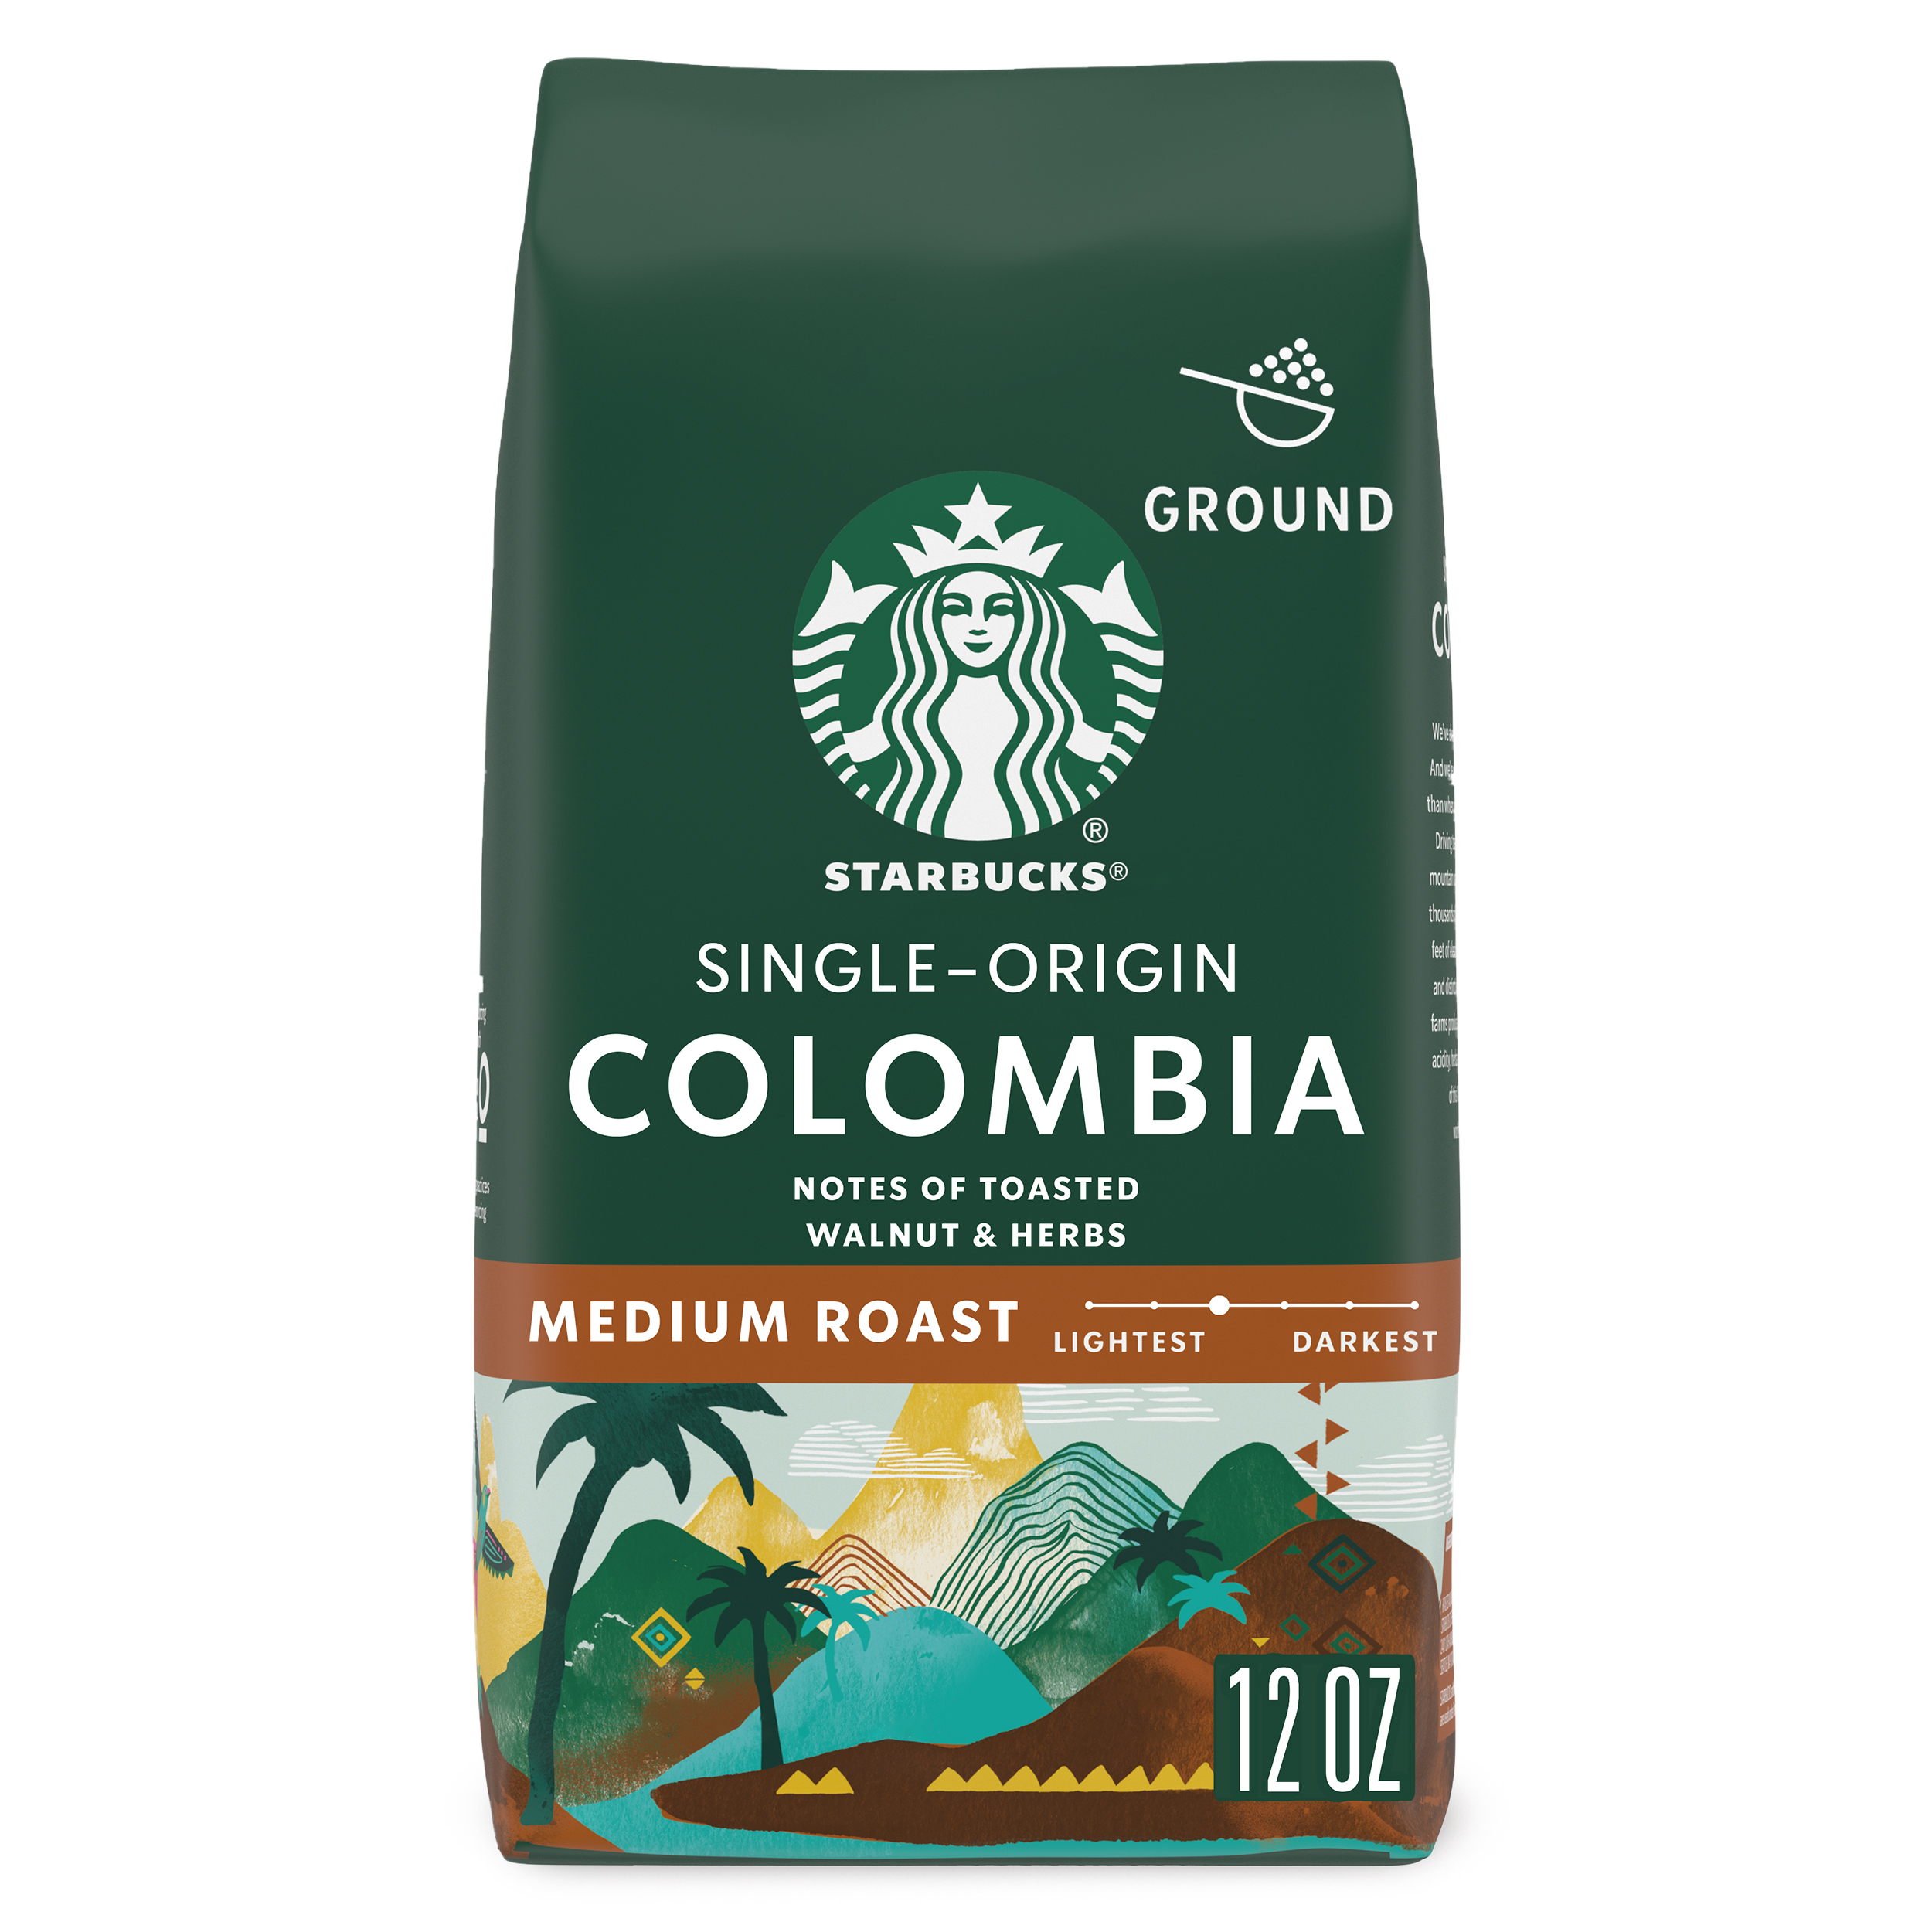 Starbucks Colombia Ground Coffee, Medium Roast, 12 oz - image 1 of 8